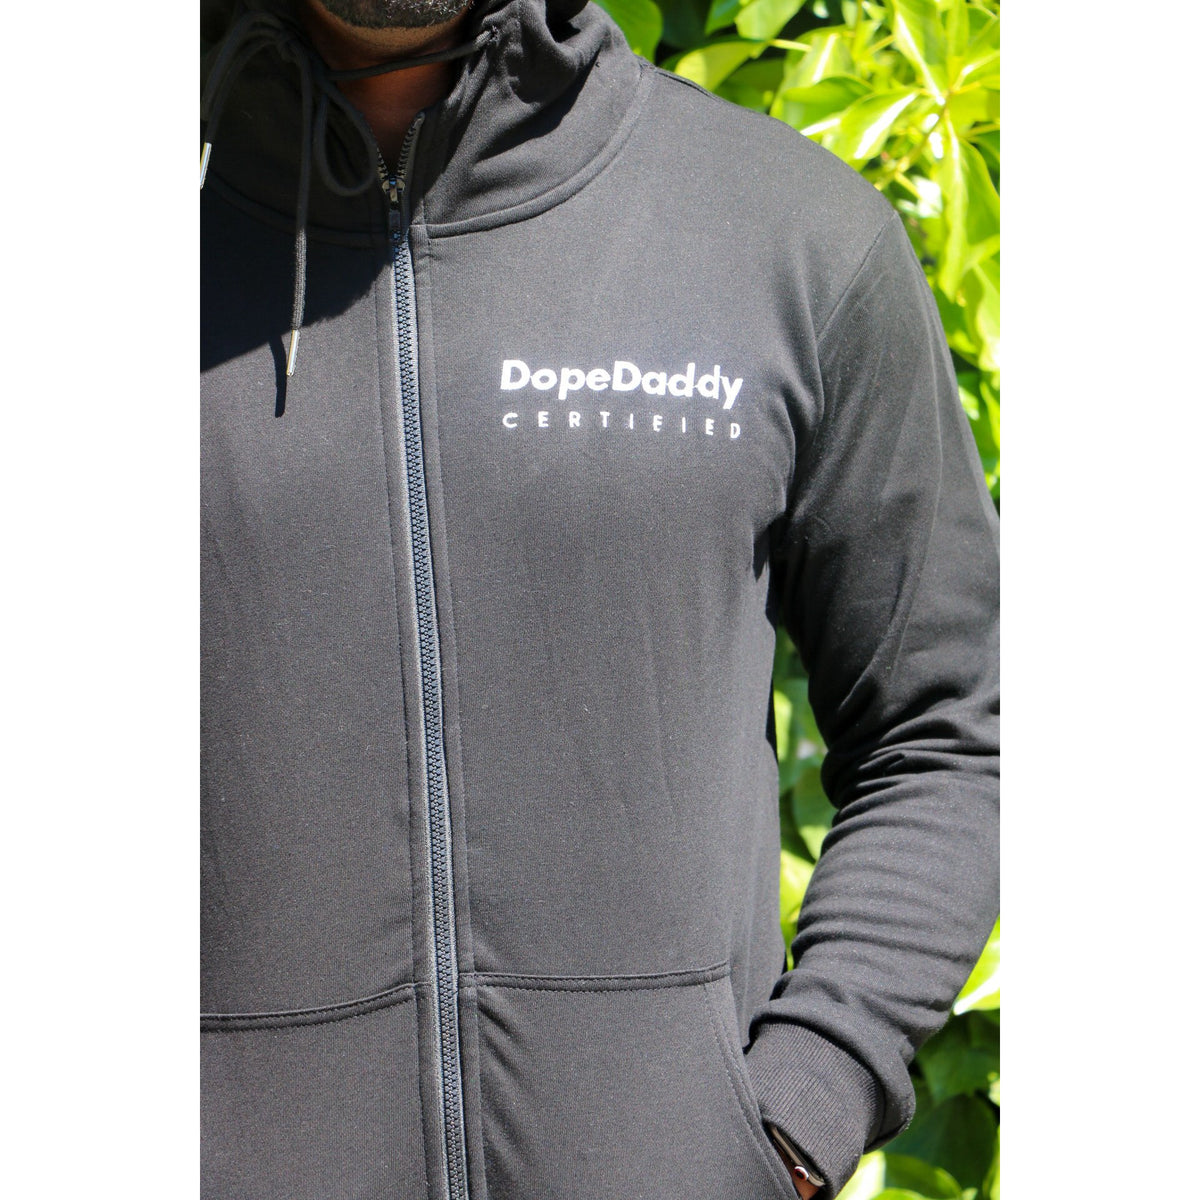 Dope Daddy Certified Zip Up Sweatsuit - Everyday Black